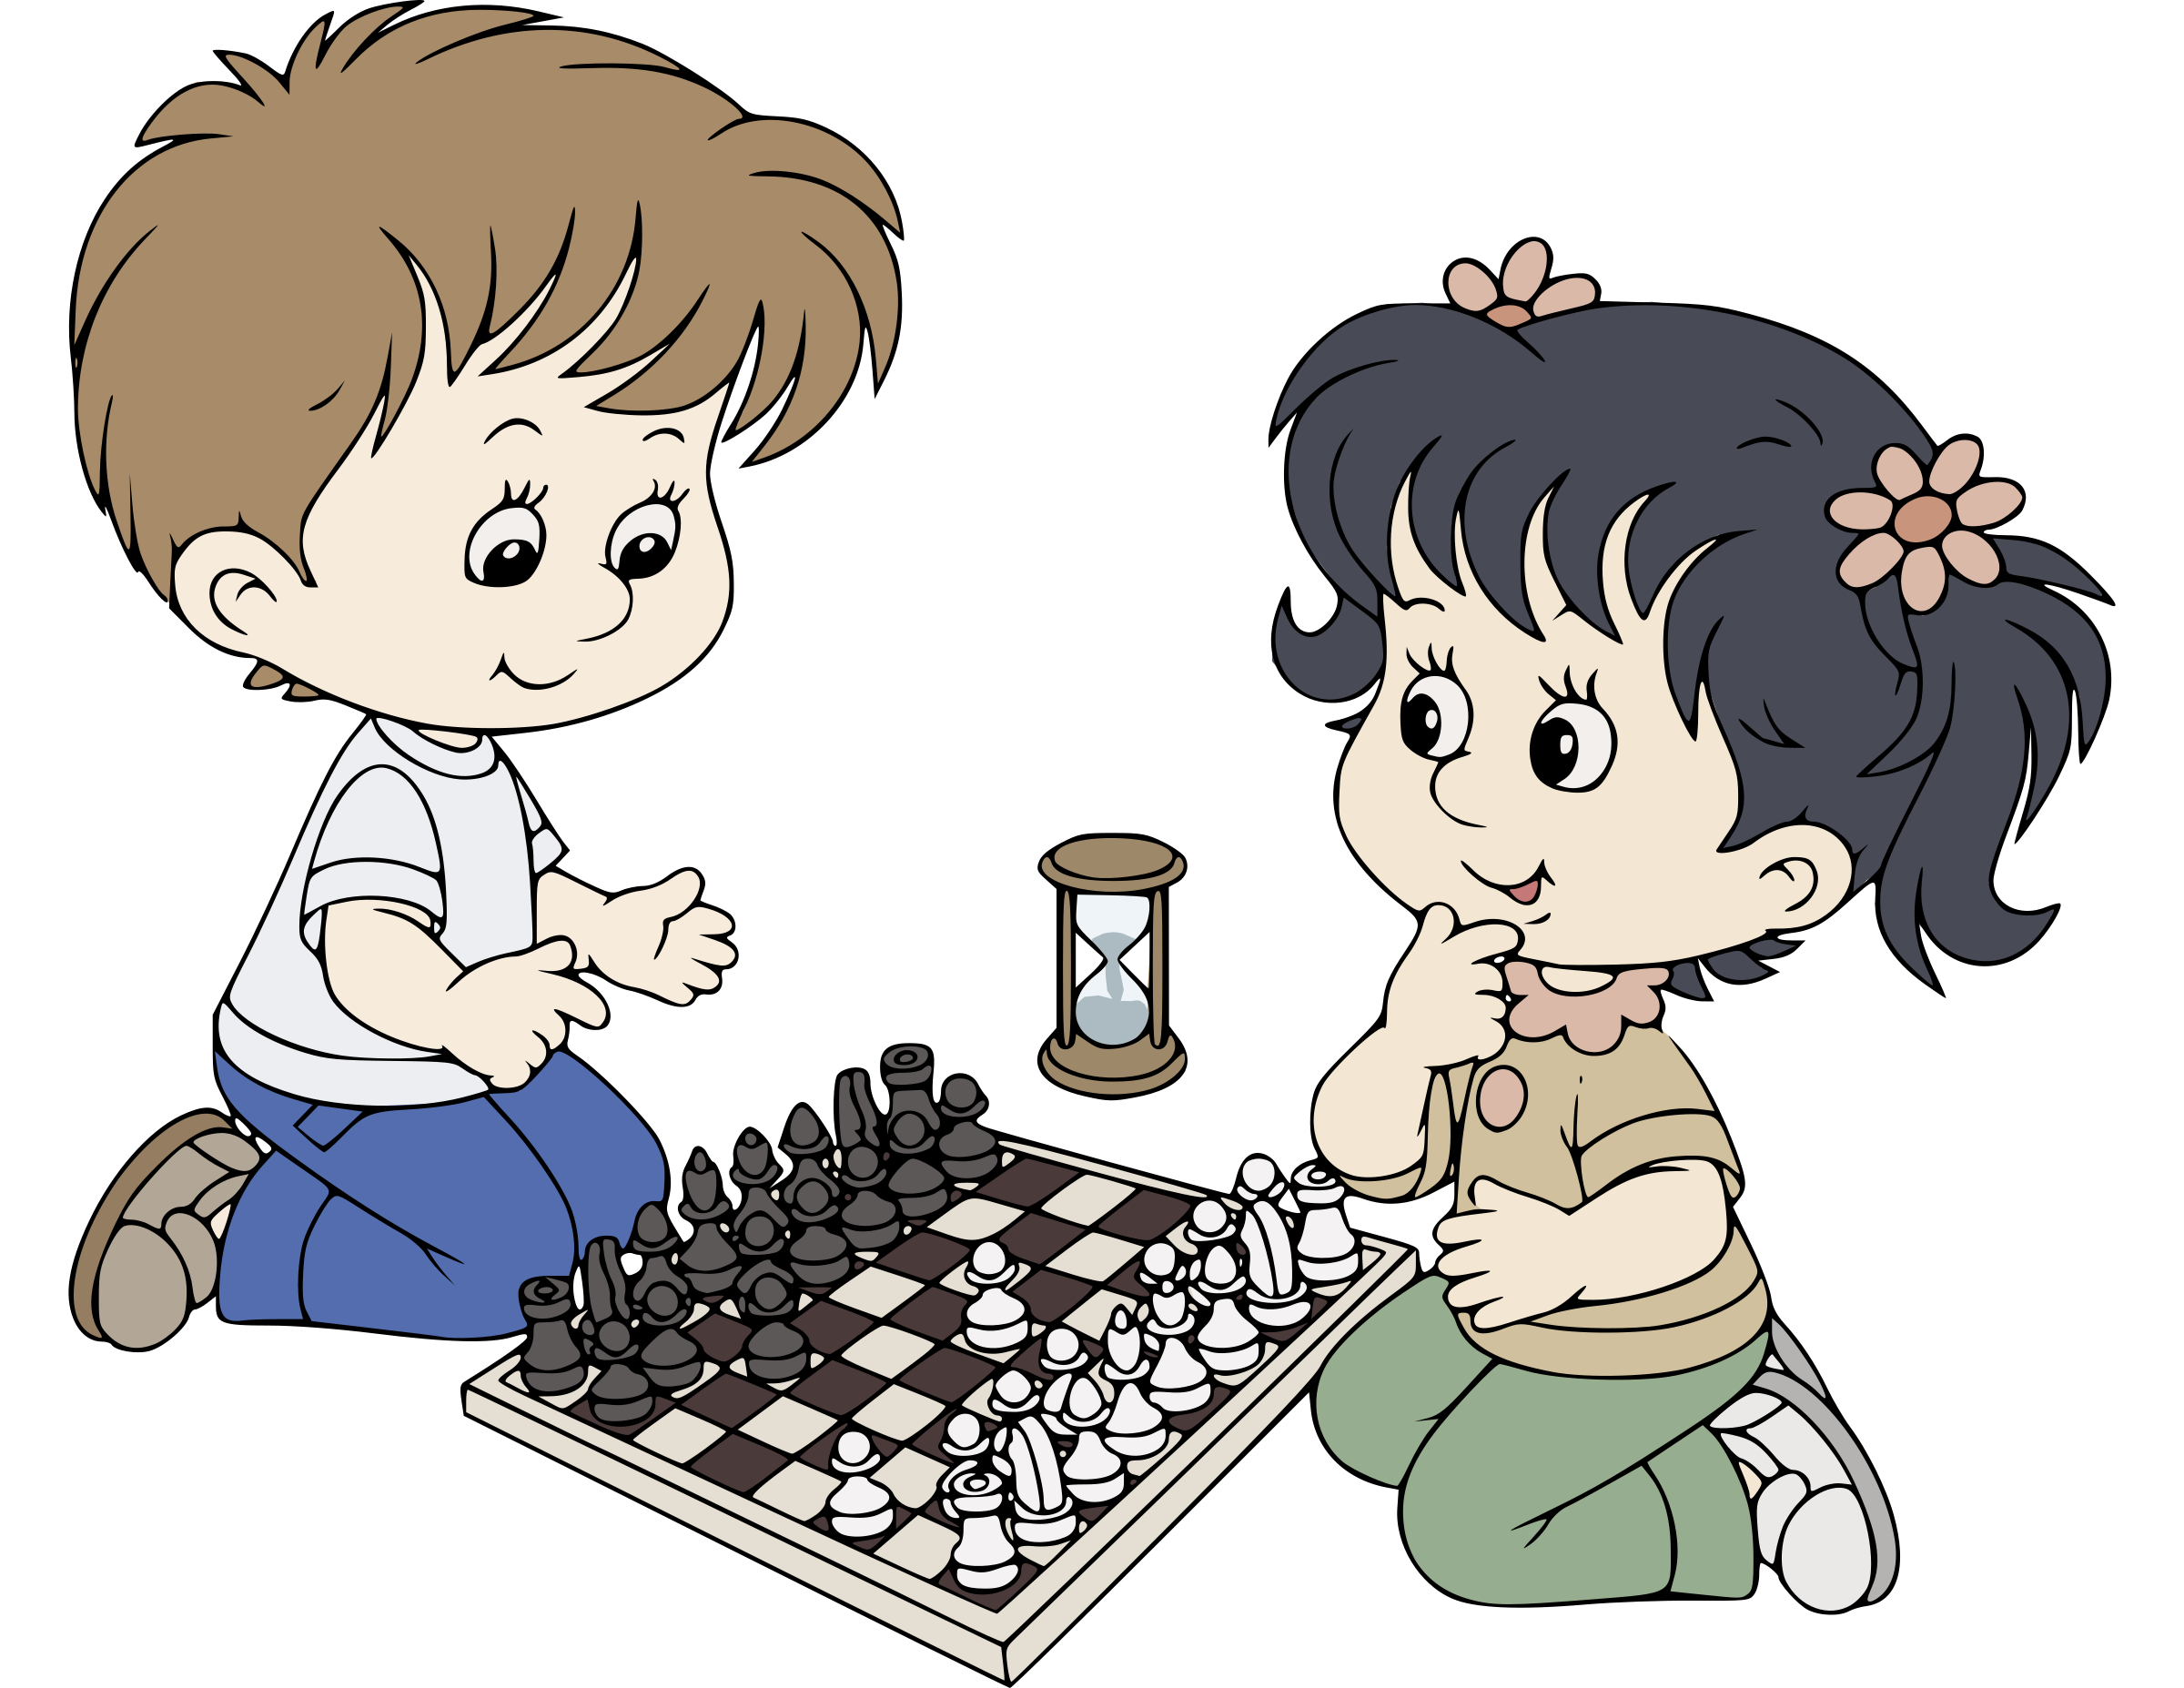 chess clipart cartoon